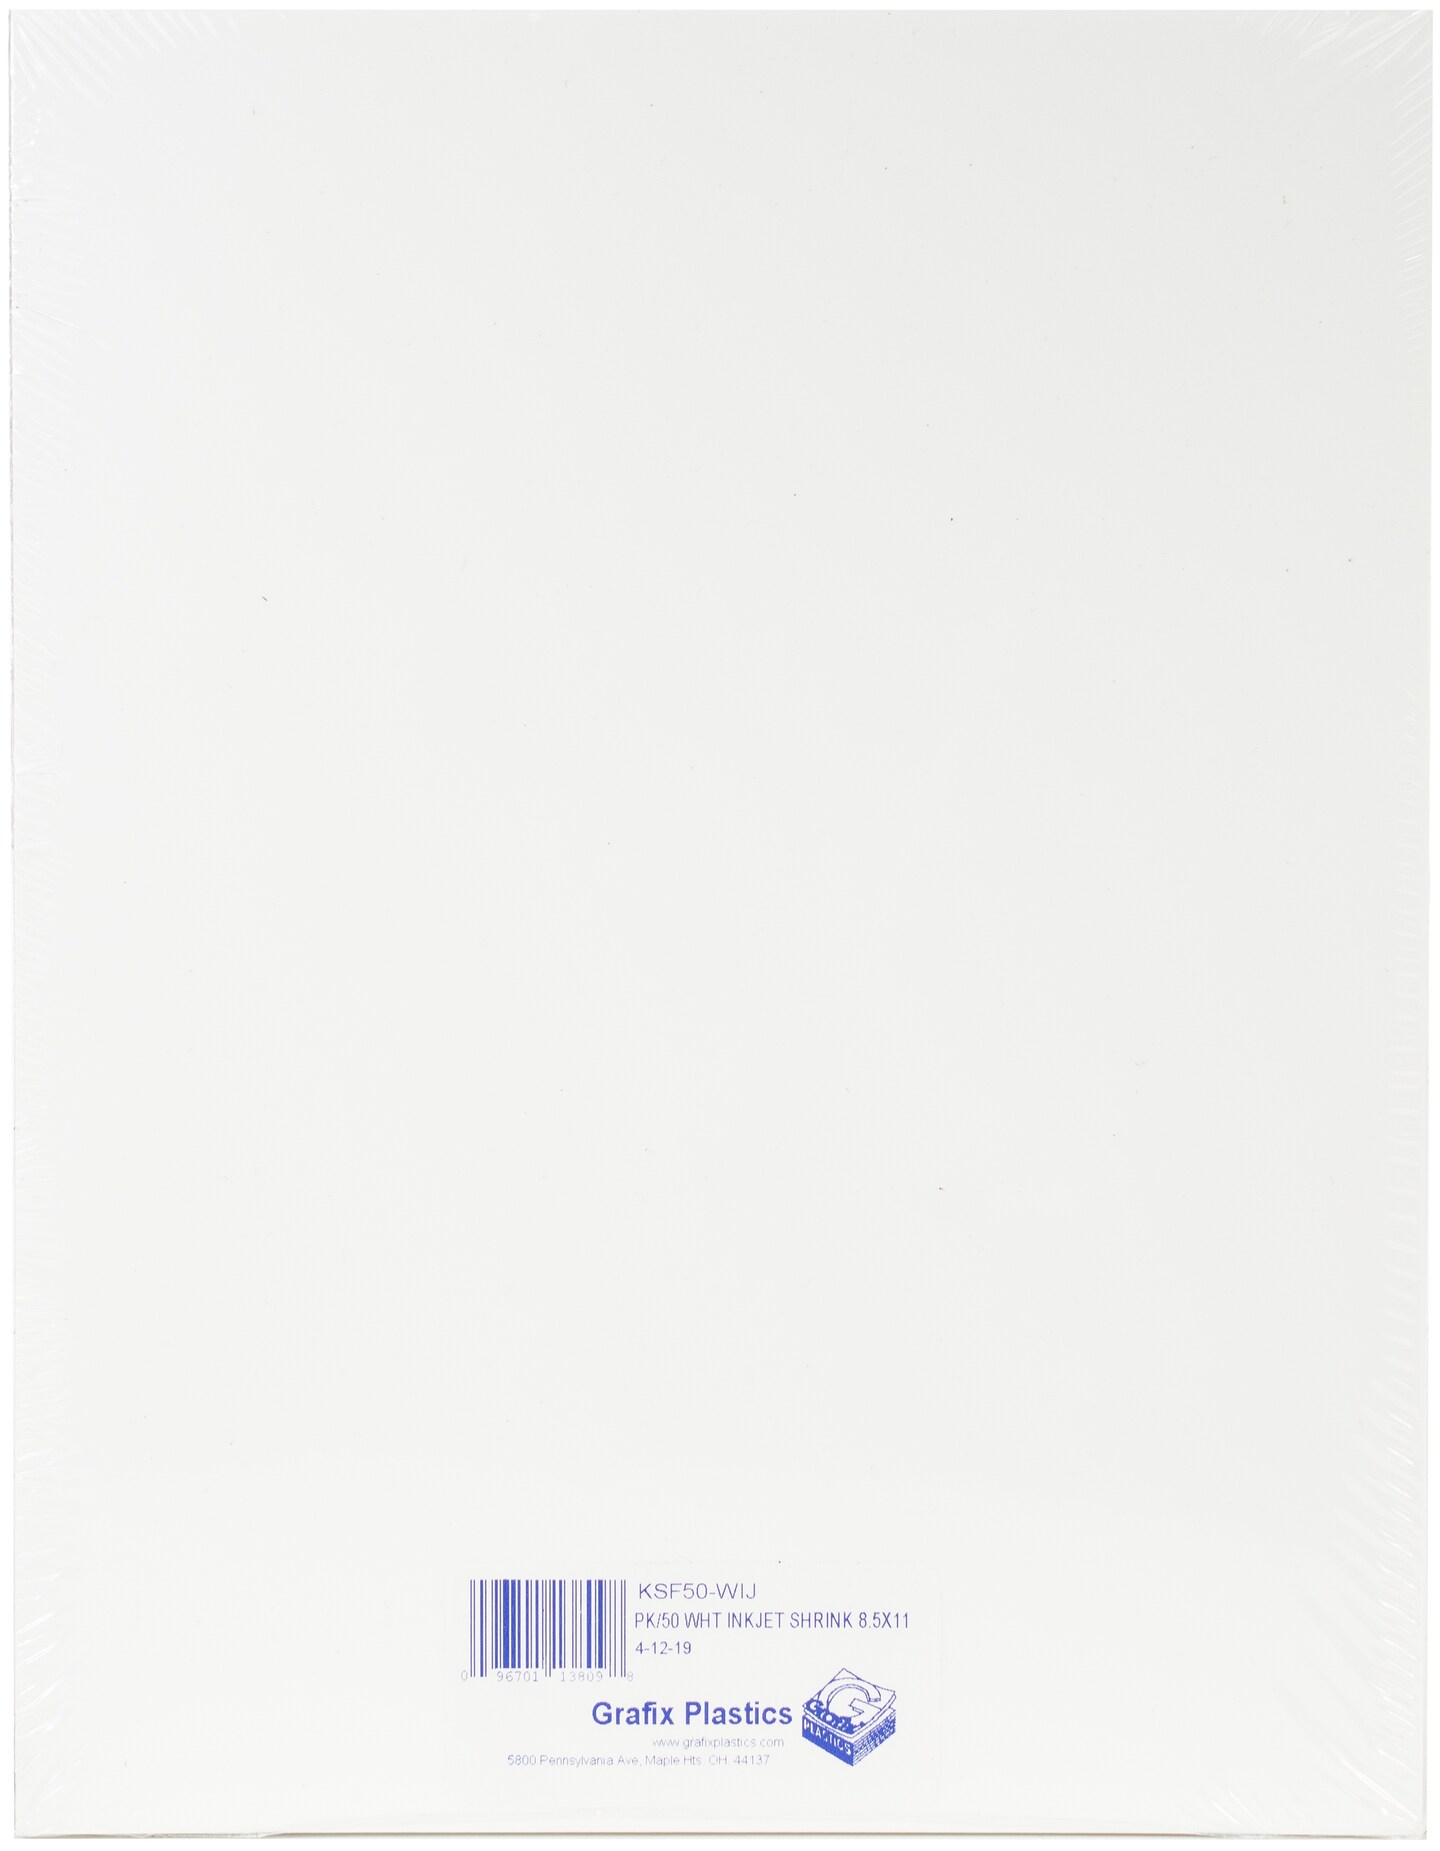 Shrink Plastic Sheets 10 Pcs 20x29cm/7.87x11.41 Inch -  Israel